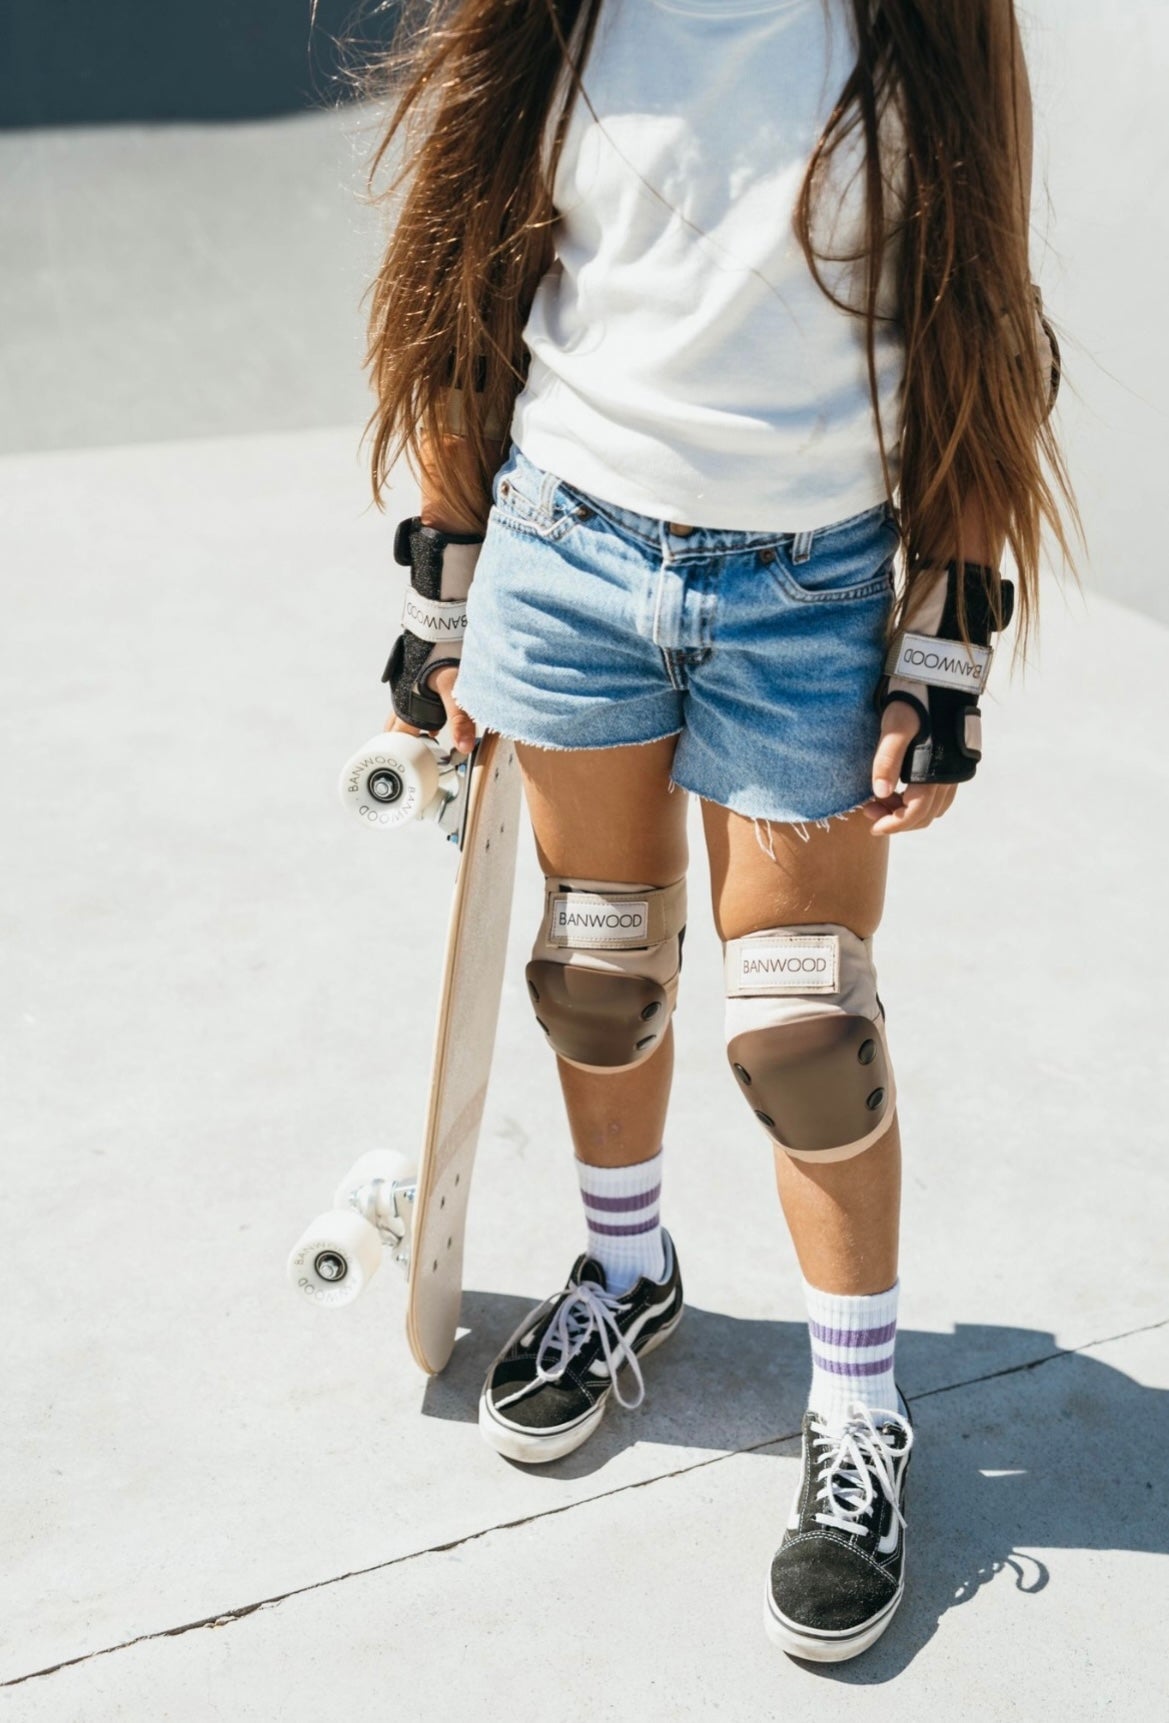 Banwood Knee Pads, Elbow Pads, Wrist Guards on Skateboarder - Alder & Alouette